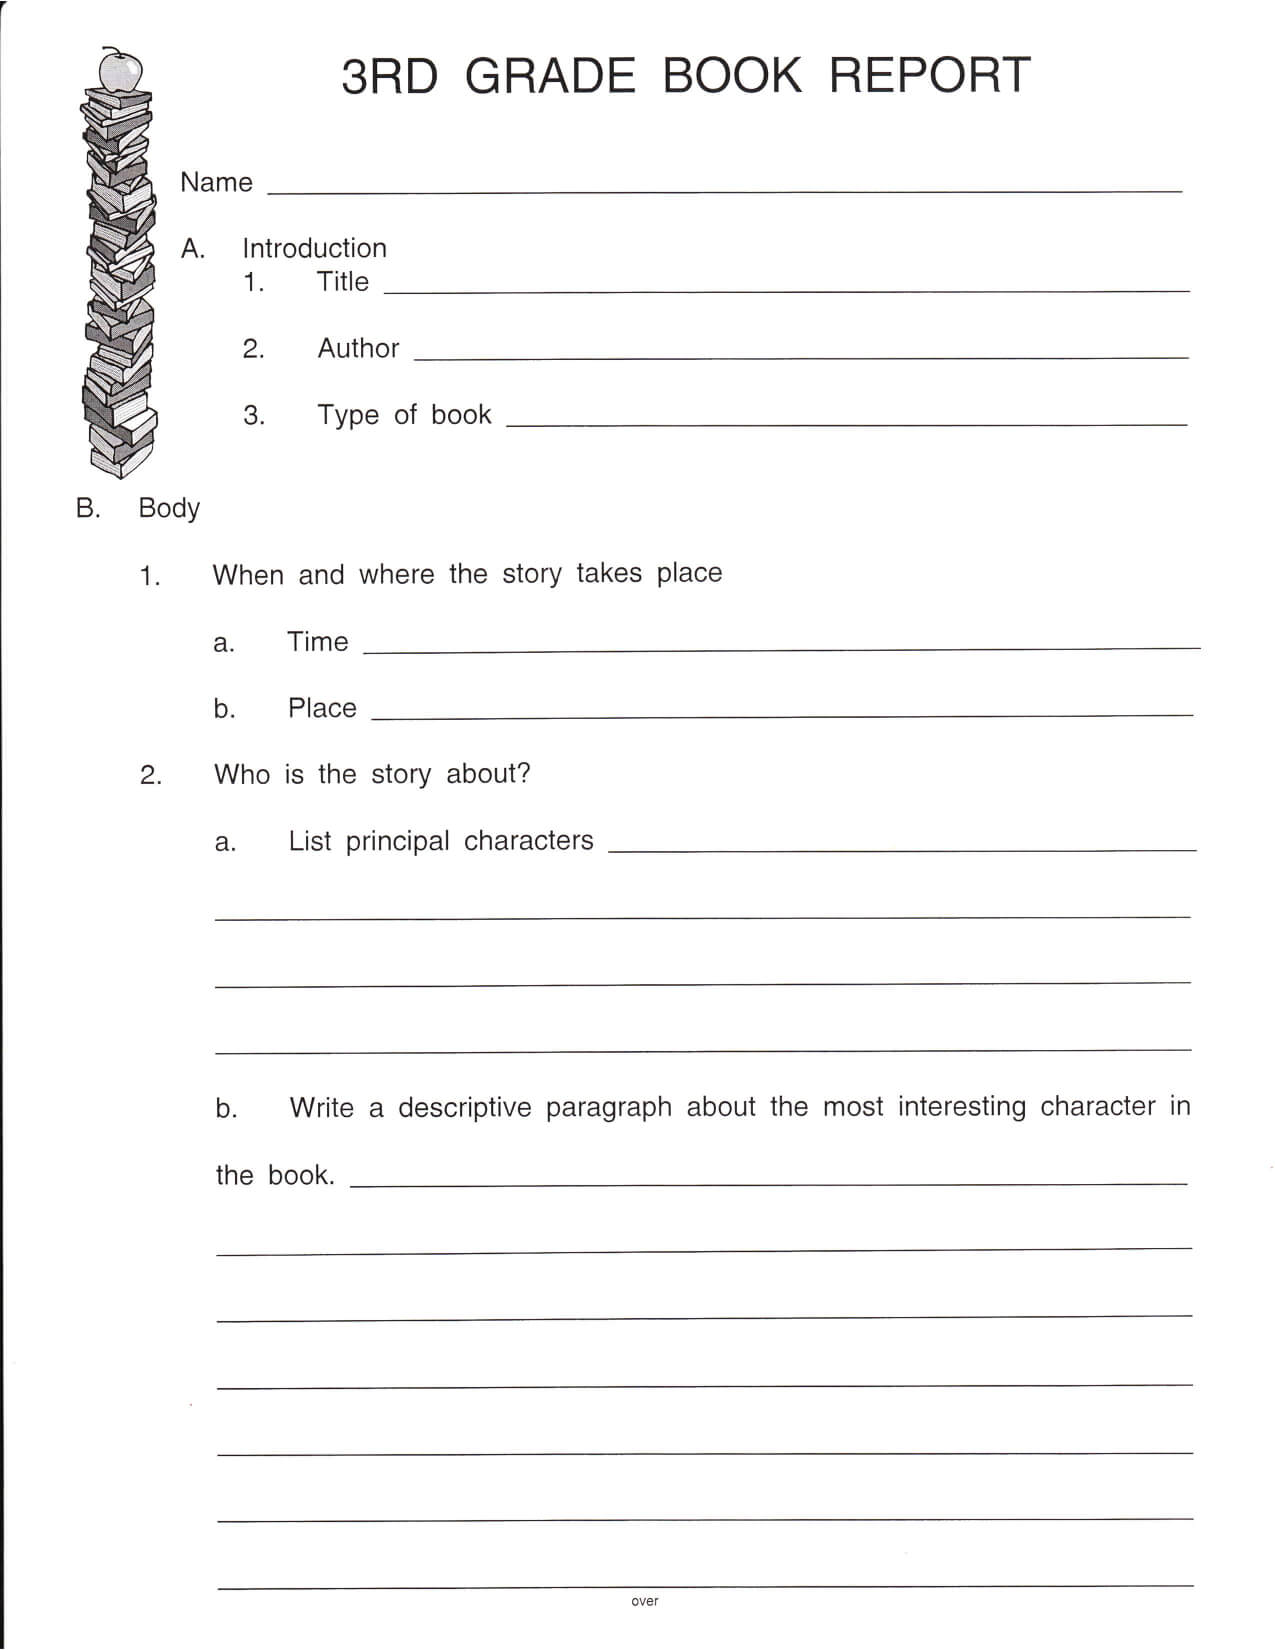 Pinshelena Schweitzer On Classroom Reading | Book Report Pertaining To First Grade Book Report Template